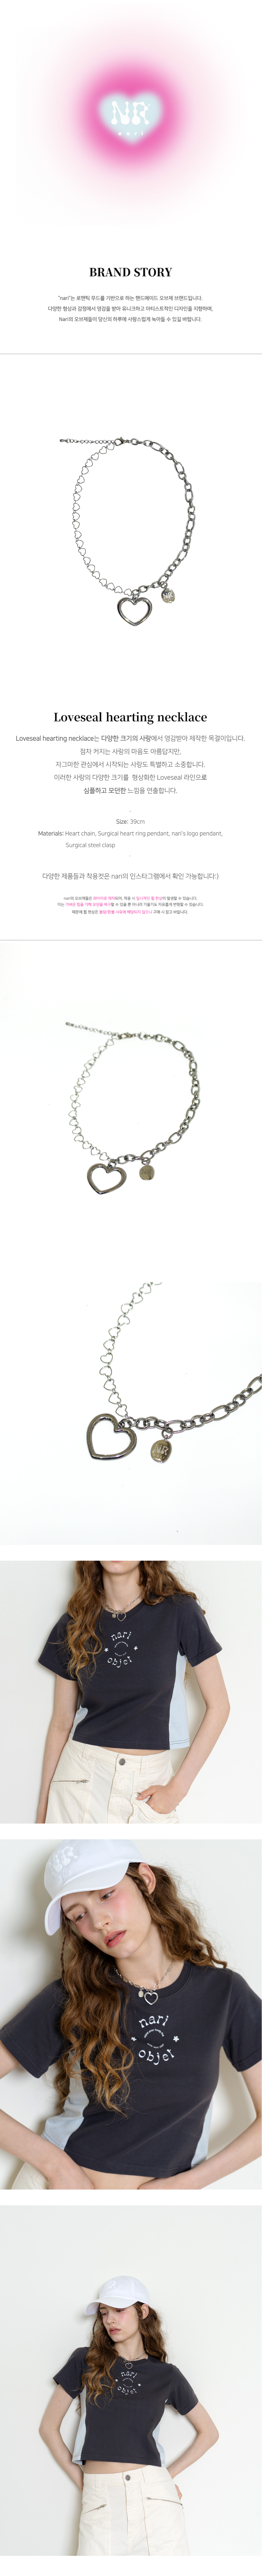 (OBJET) Loveseal hearting necklace